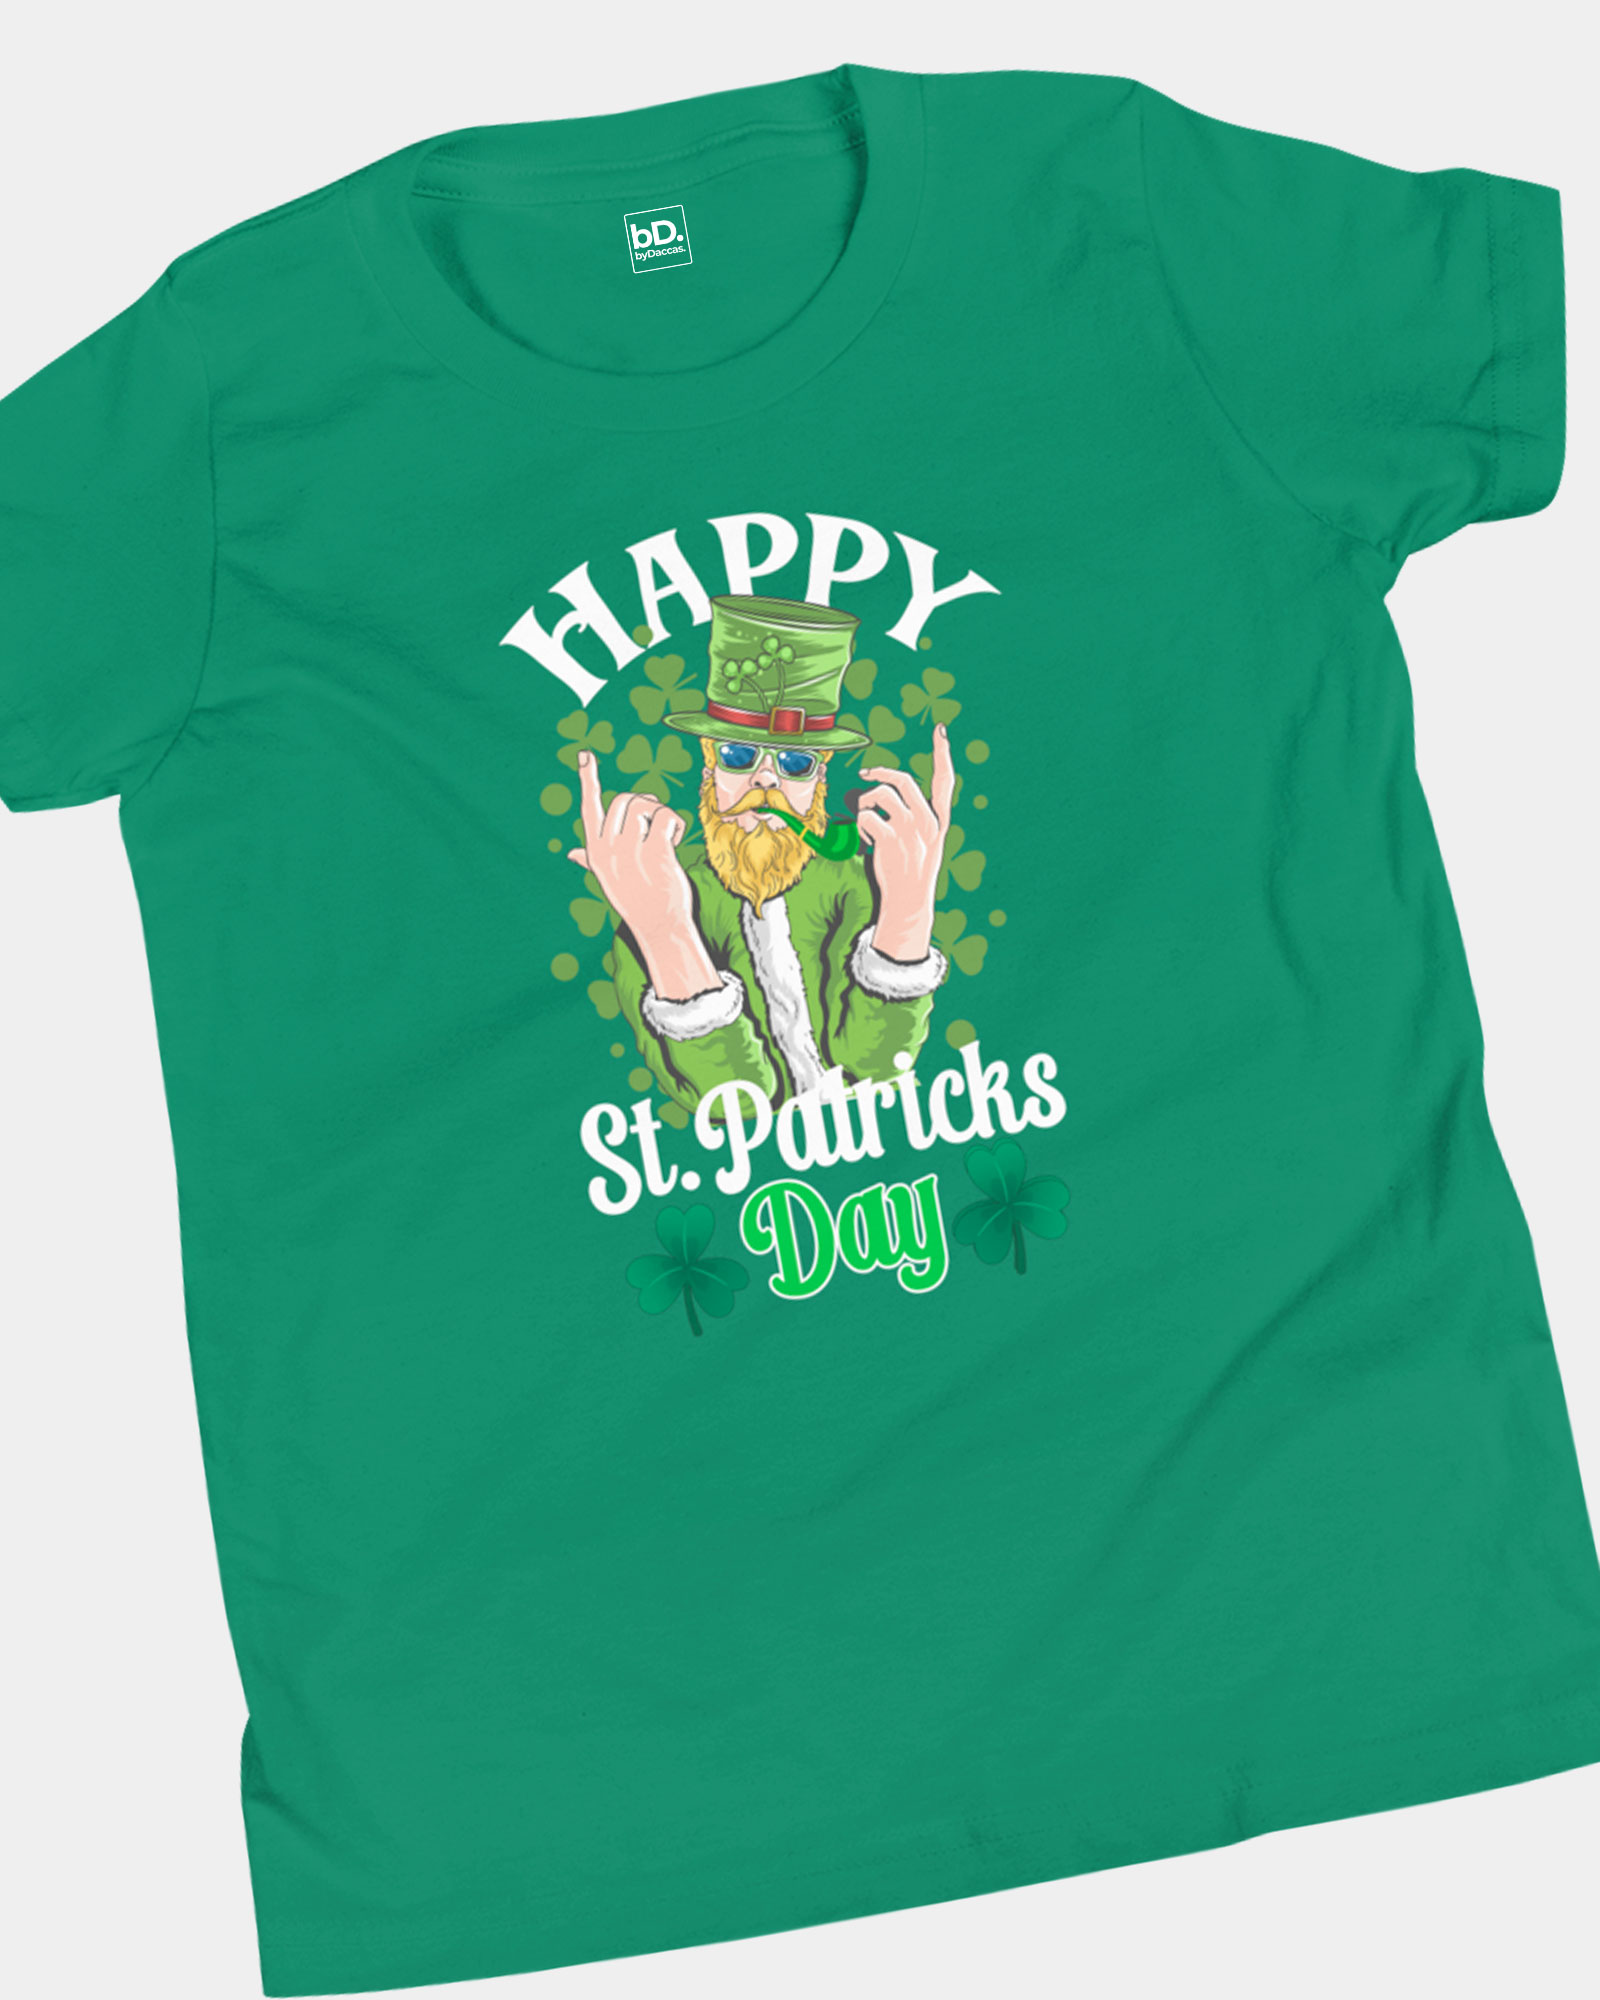 T-shirt kid - St. Parick's day